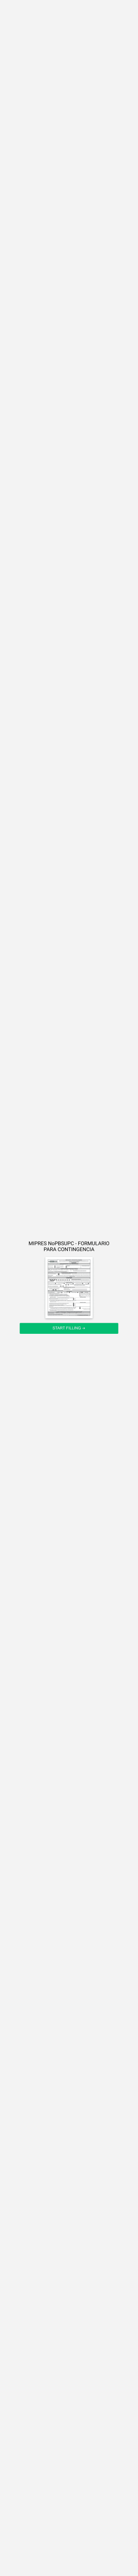 MIPRES NoPBSUPC FORMULARIO PARA CONTINGENCIA Form Template